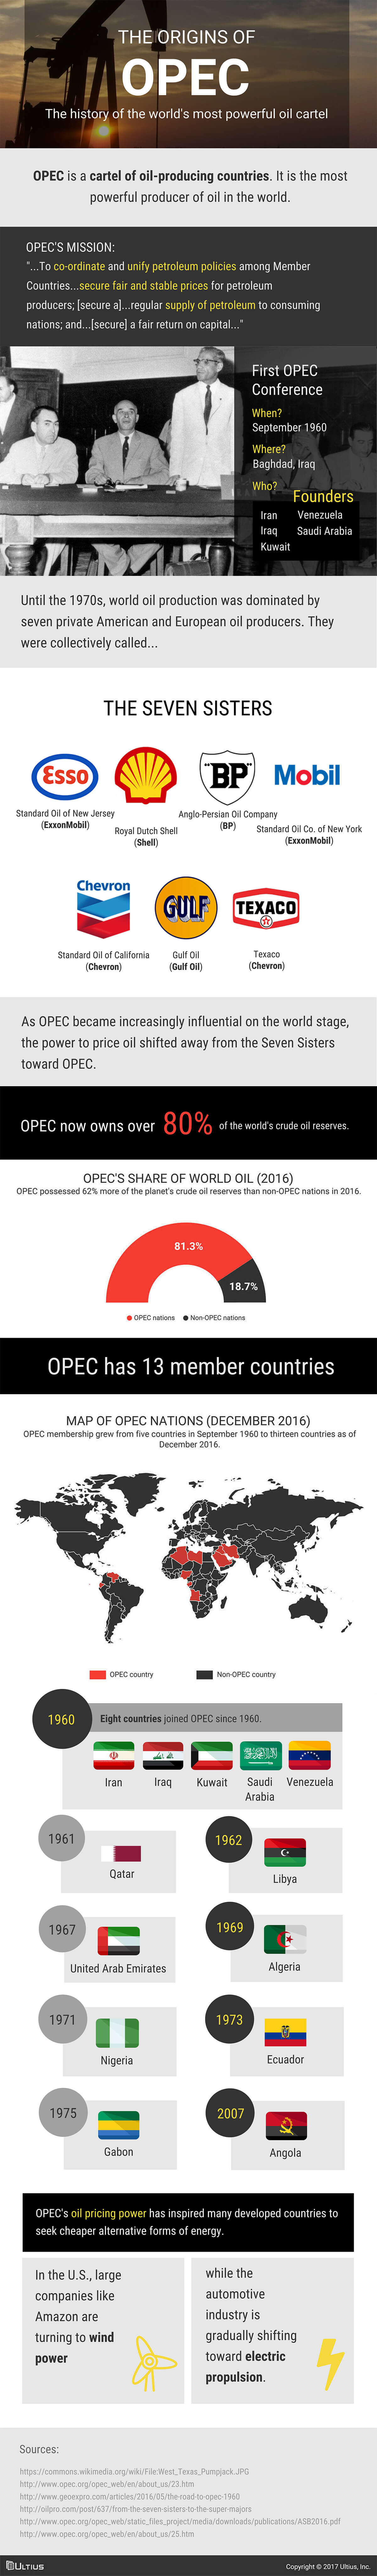 Infographic - The Origins of OPEC